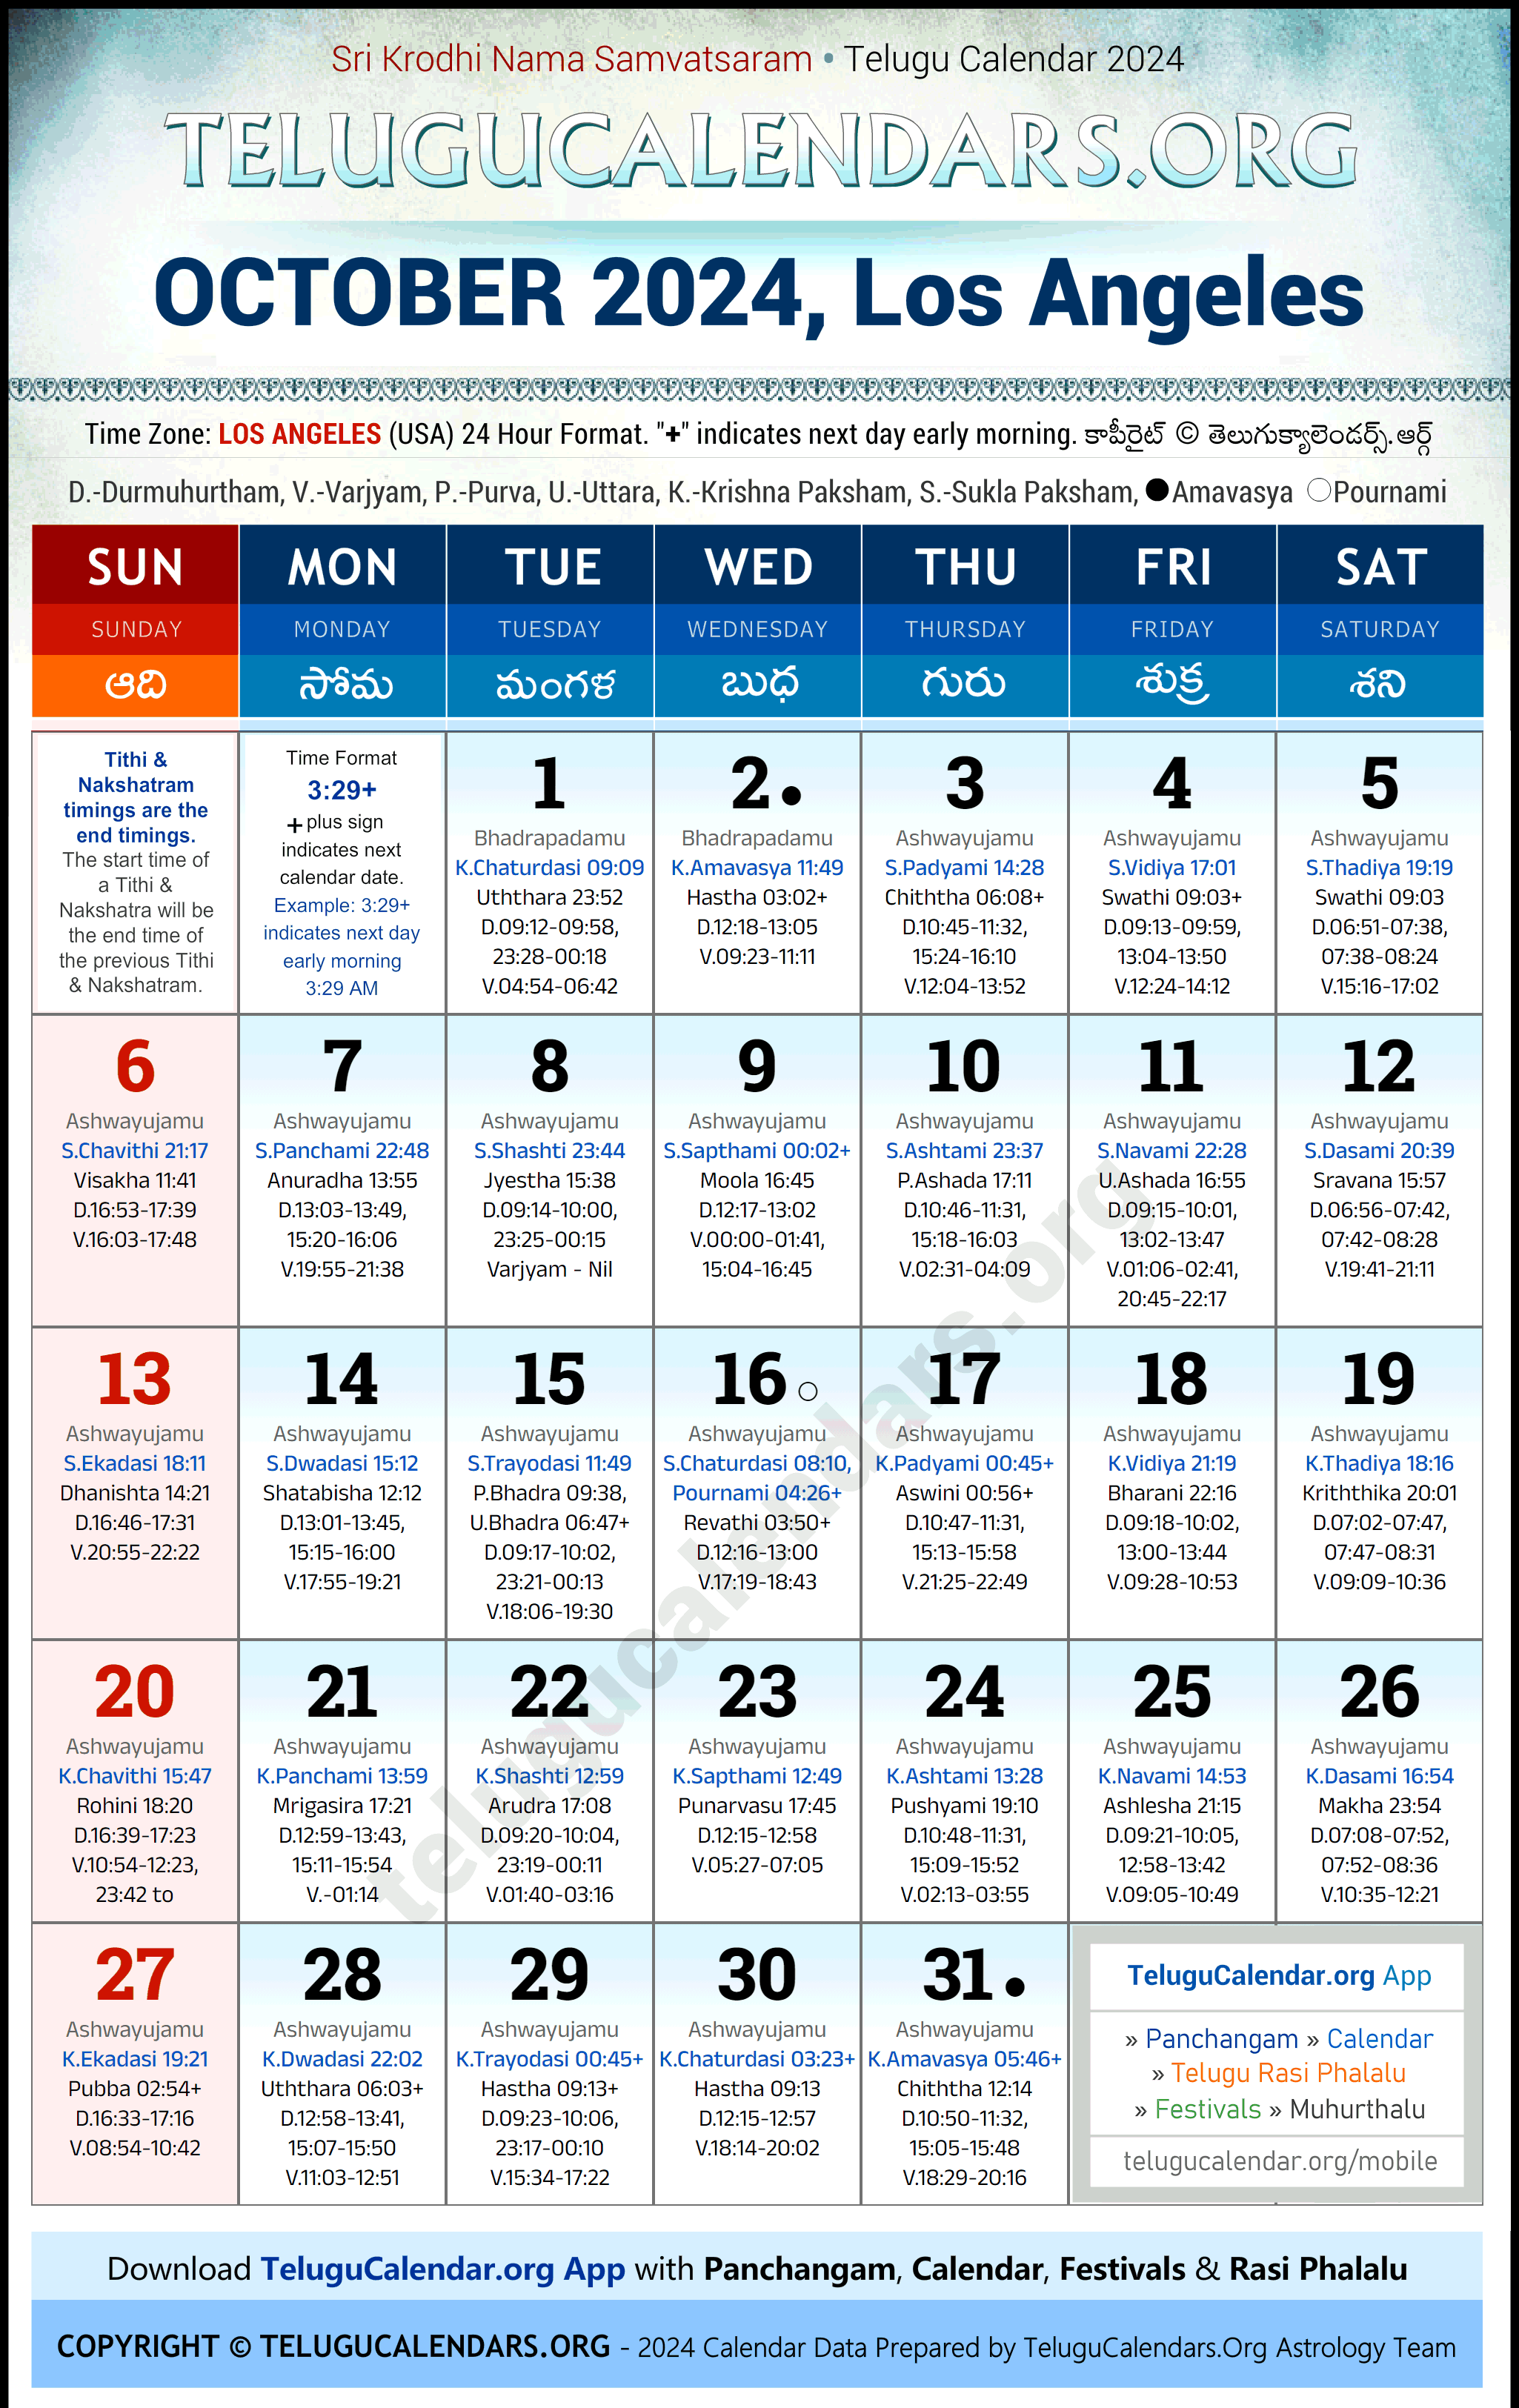 Telugu Calendar 2024 October Festivals for Los Angeles